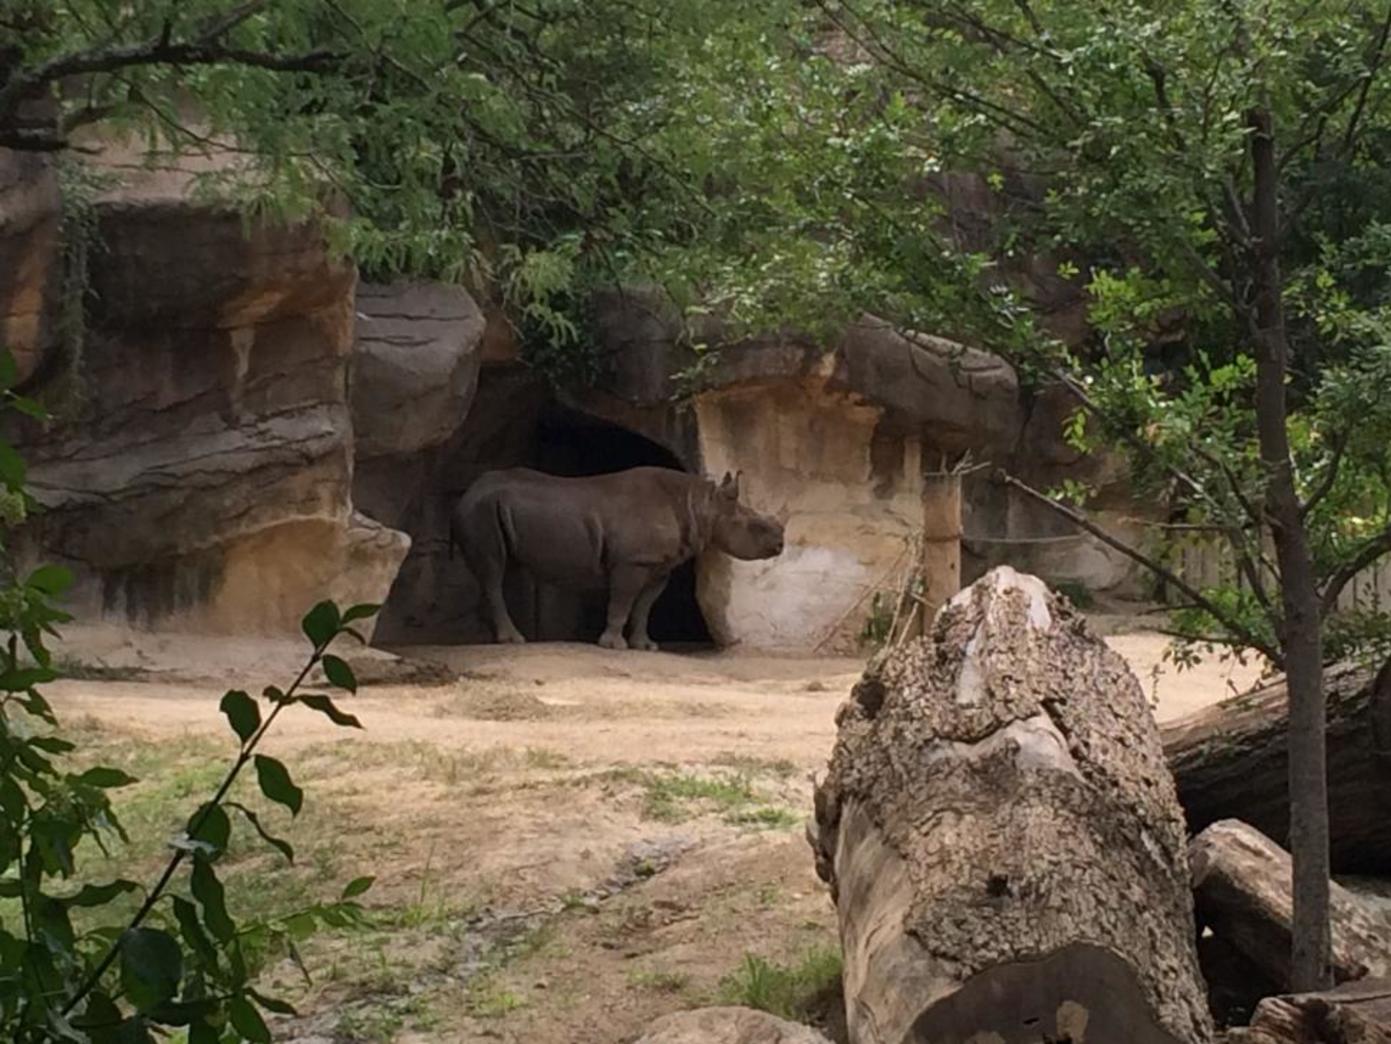 Rhino at Cincinnati Zoo (photo: Shannan Boyer)